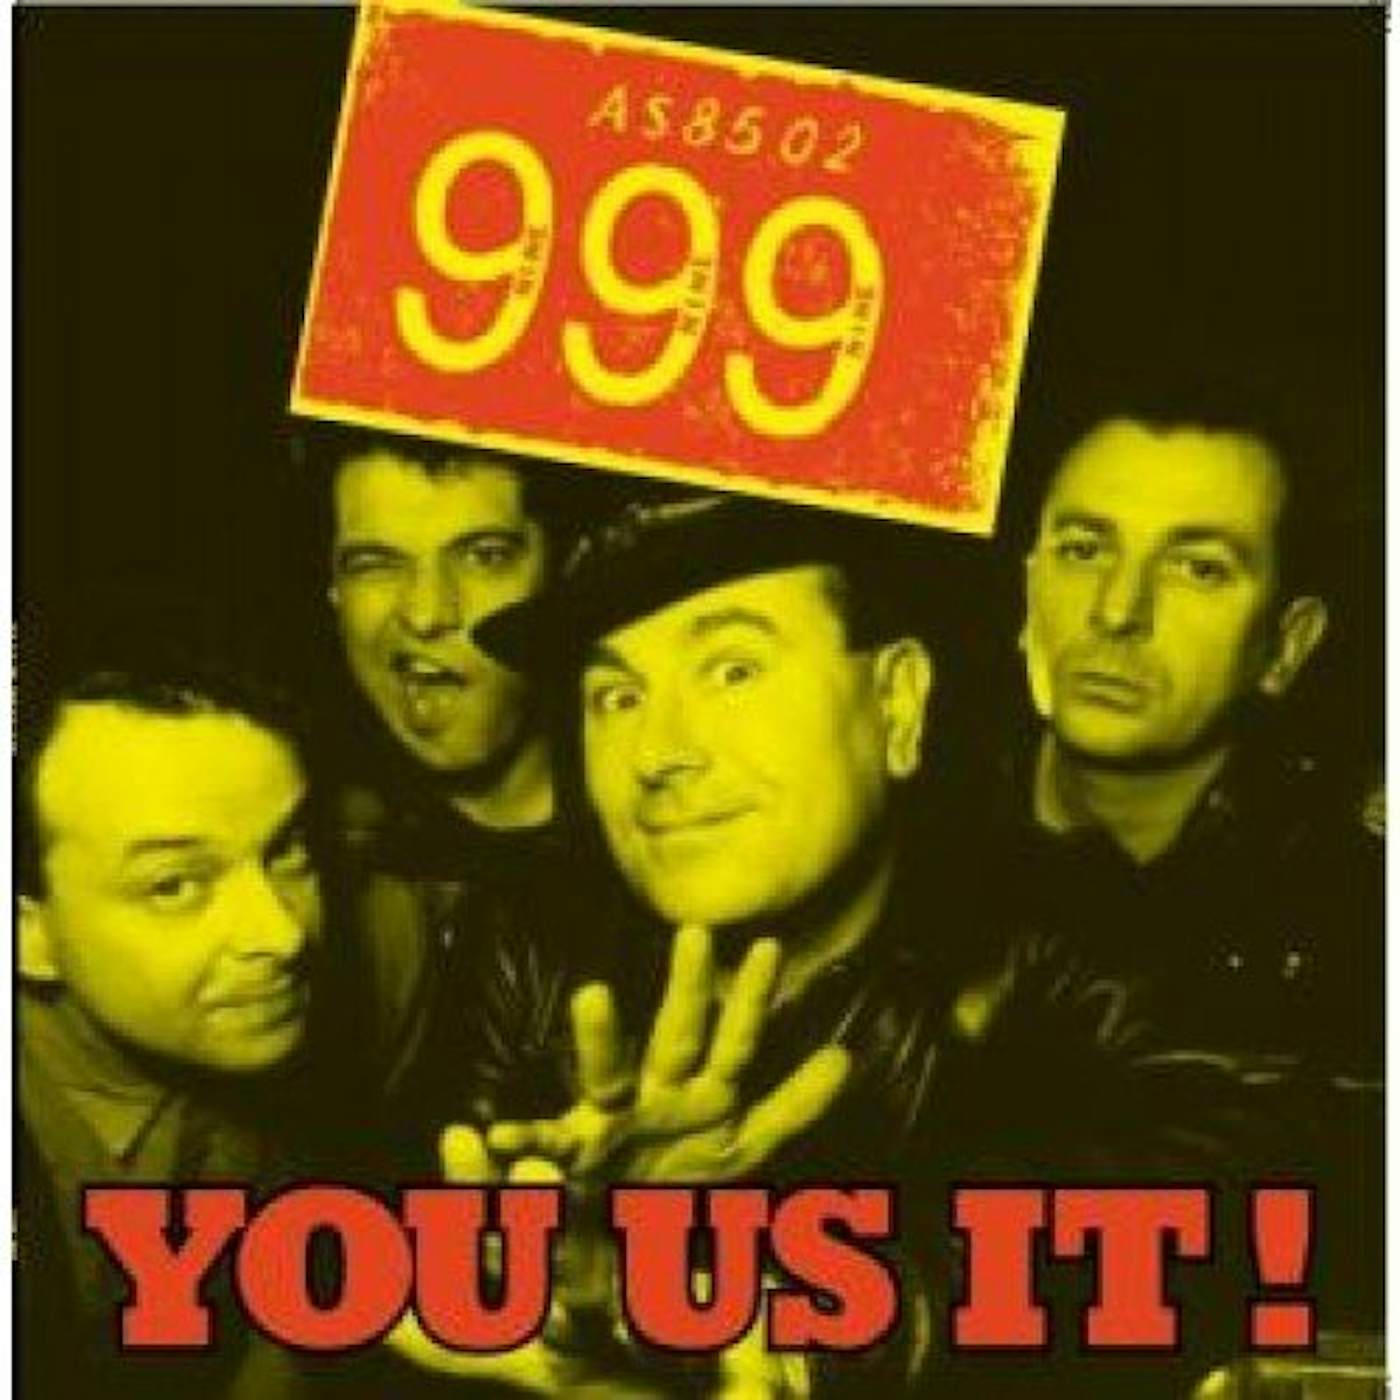 999 YOU US IT Vinyl Record